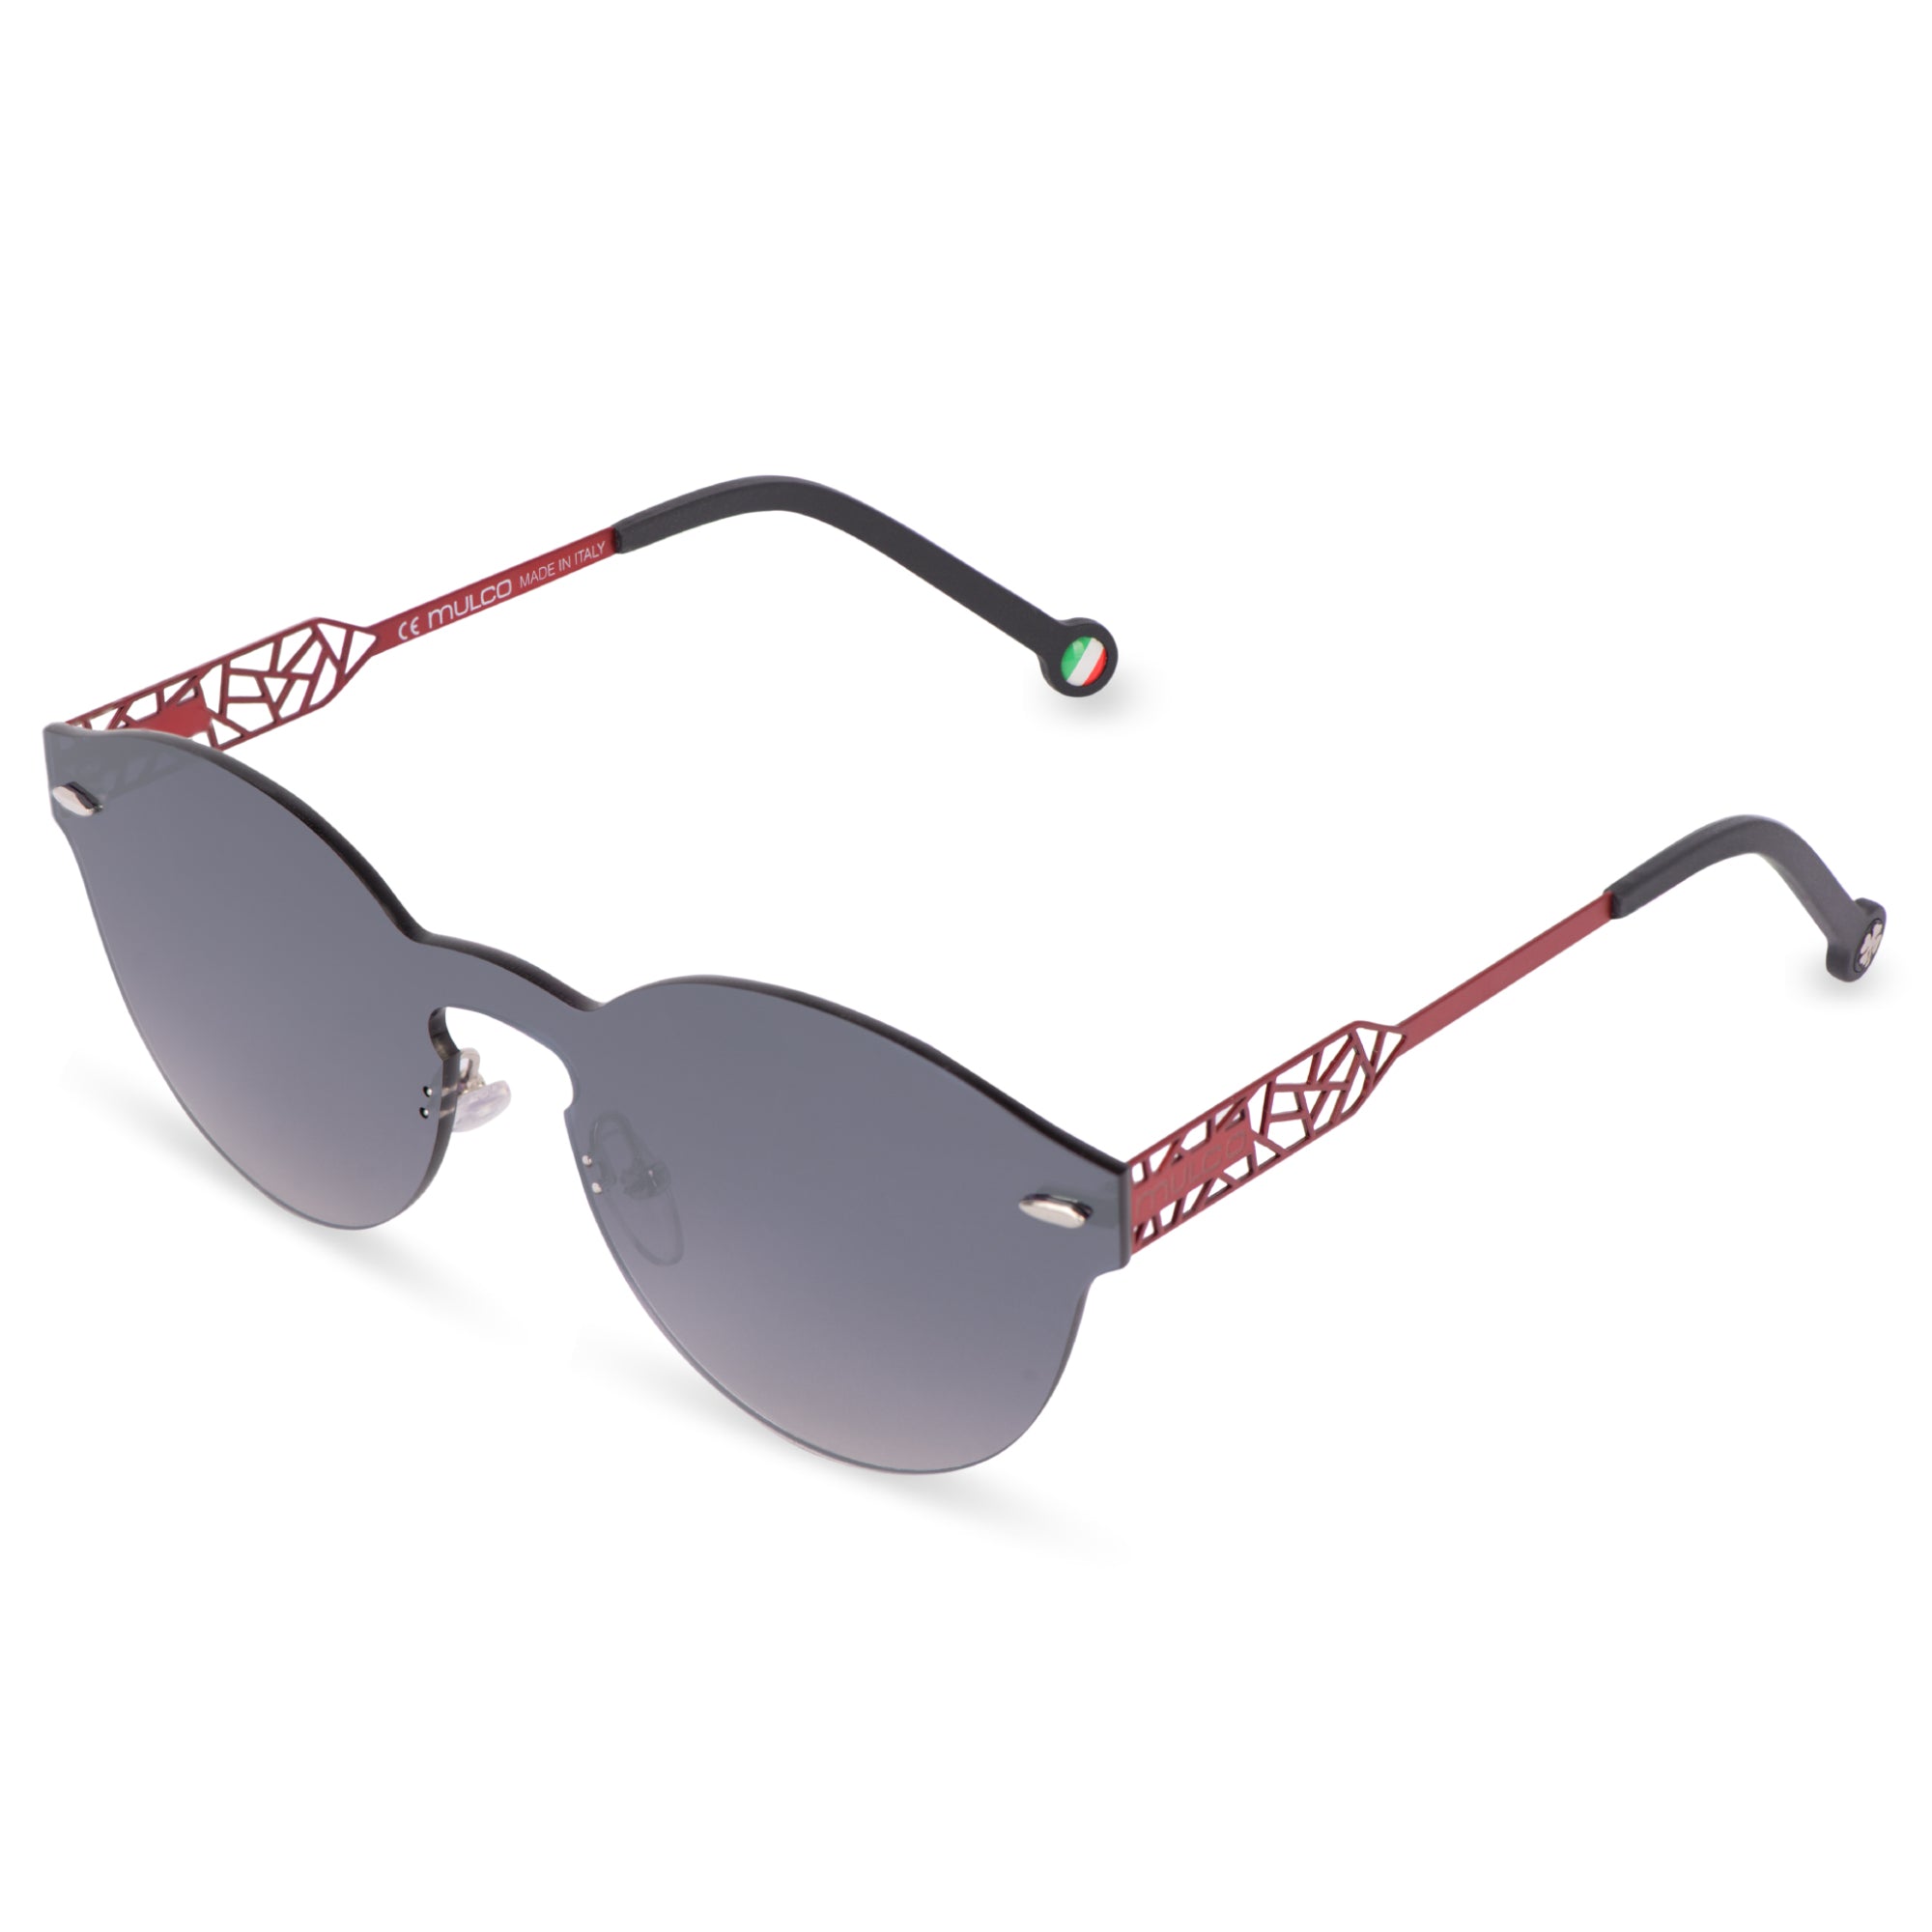 Sunglasses Round Shape – Watches Web Steel Stainless Mulco MK